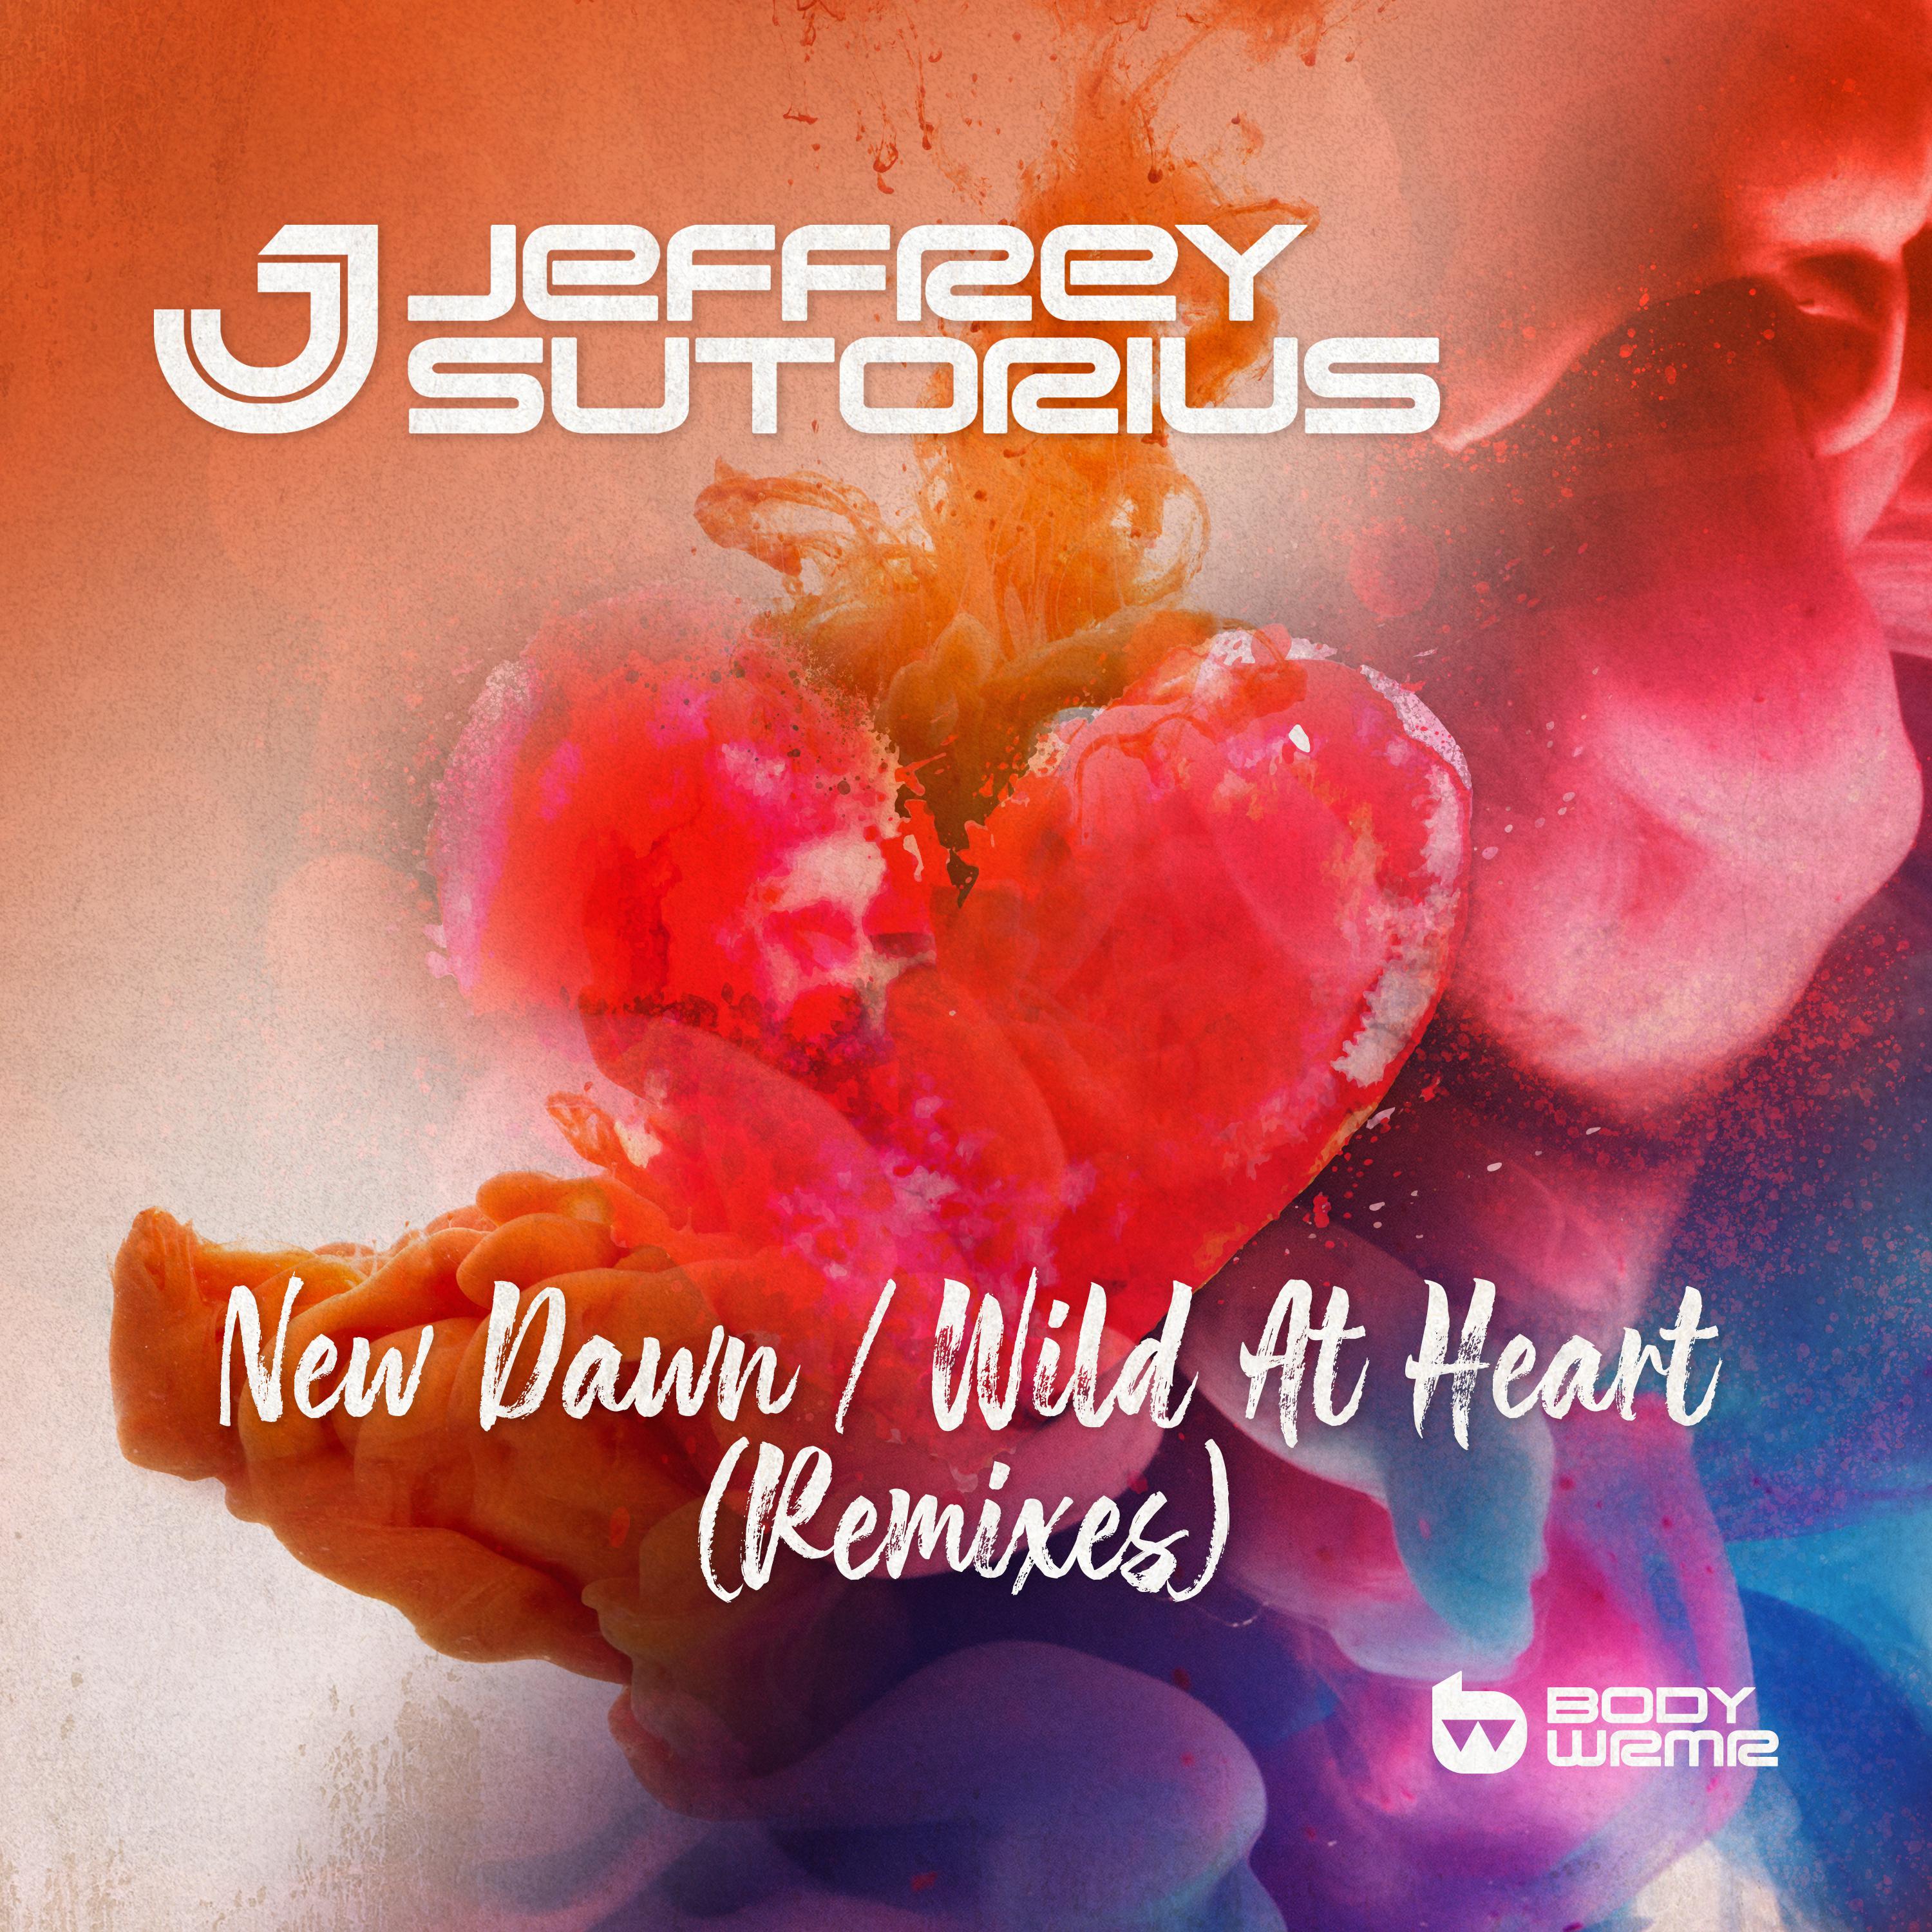 Jeffrey Sutorius - New Dawn (Acoustic Mix)